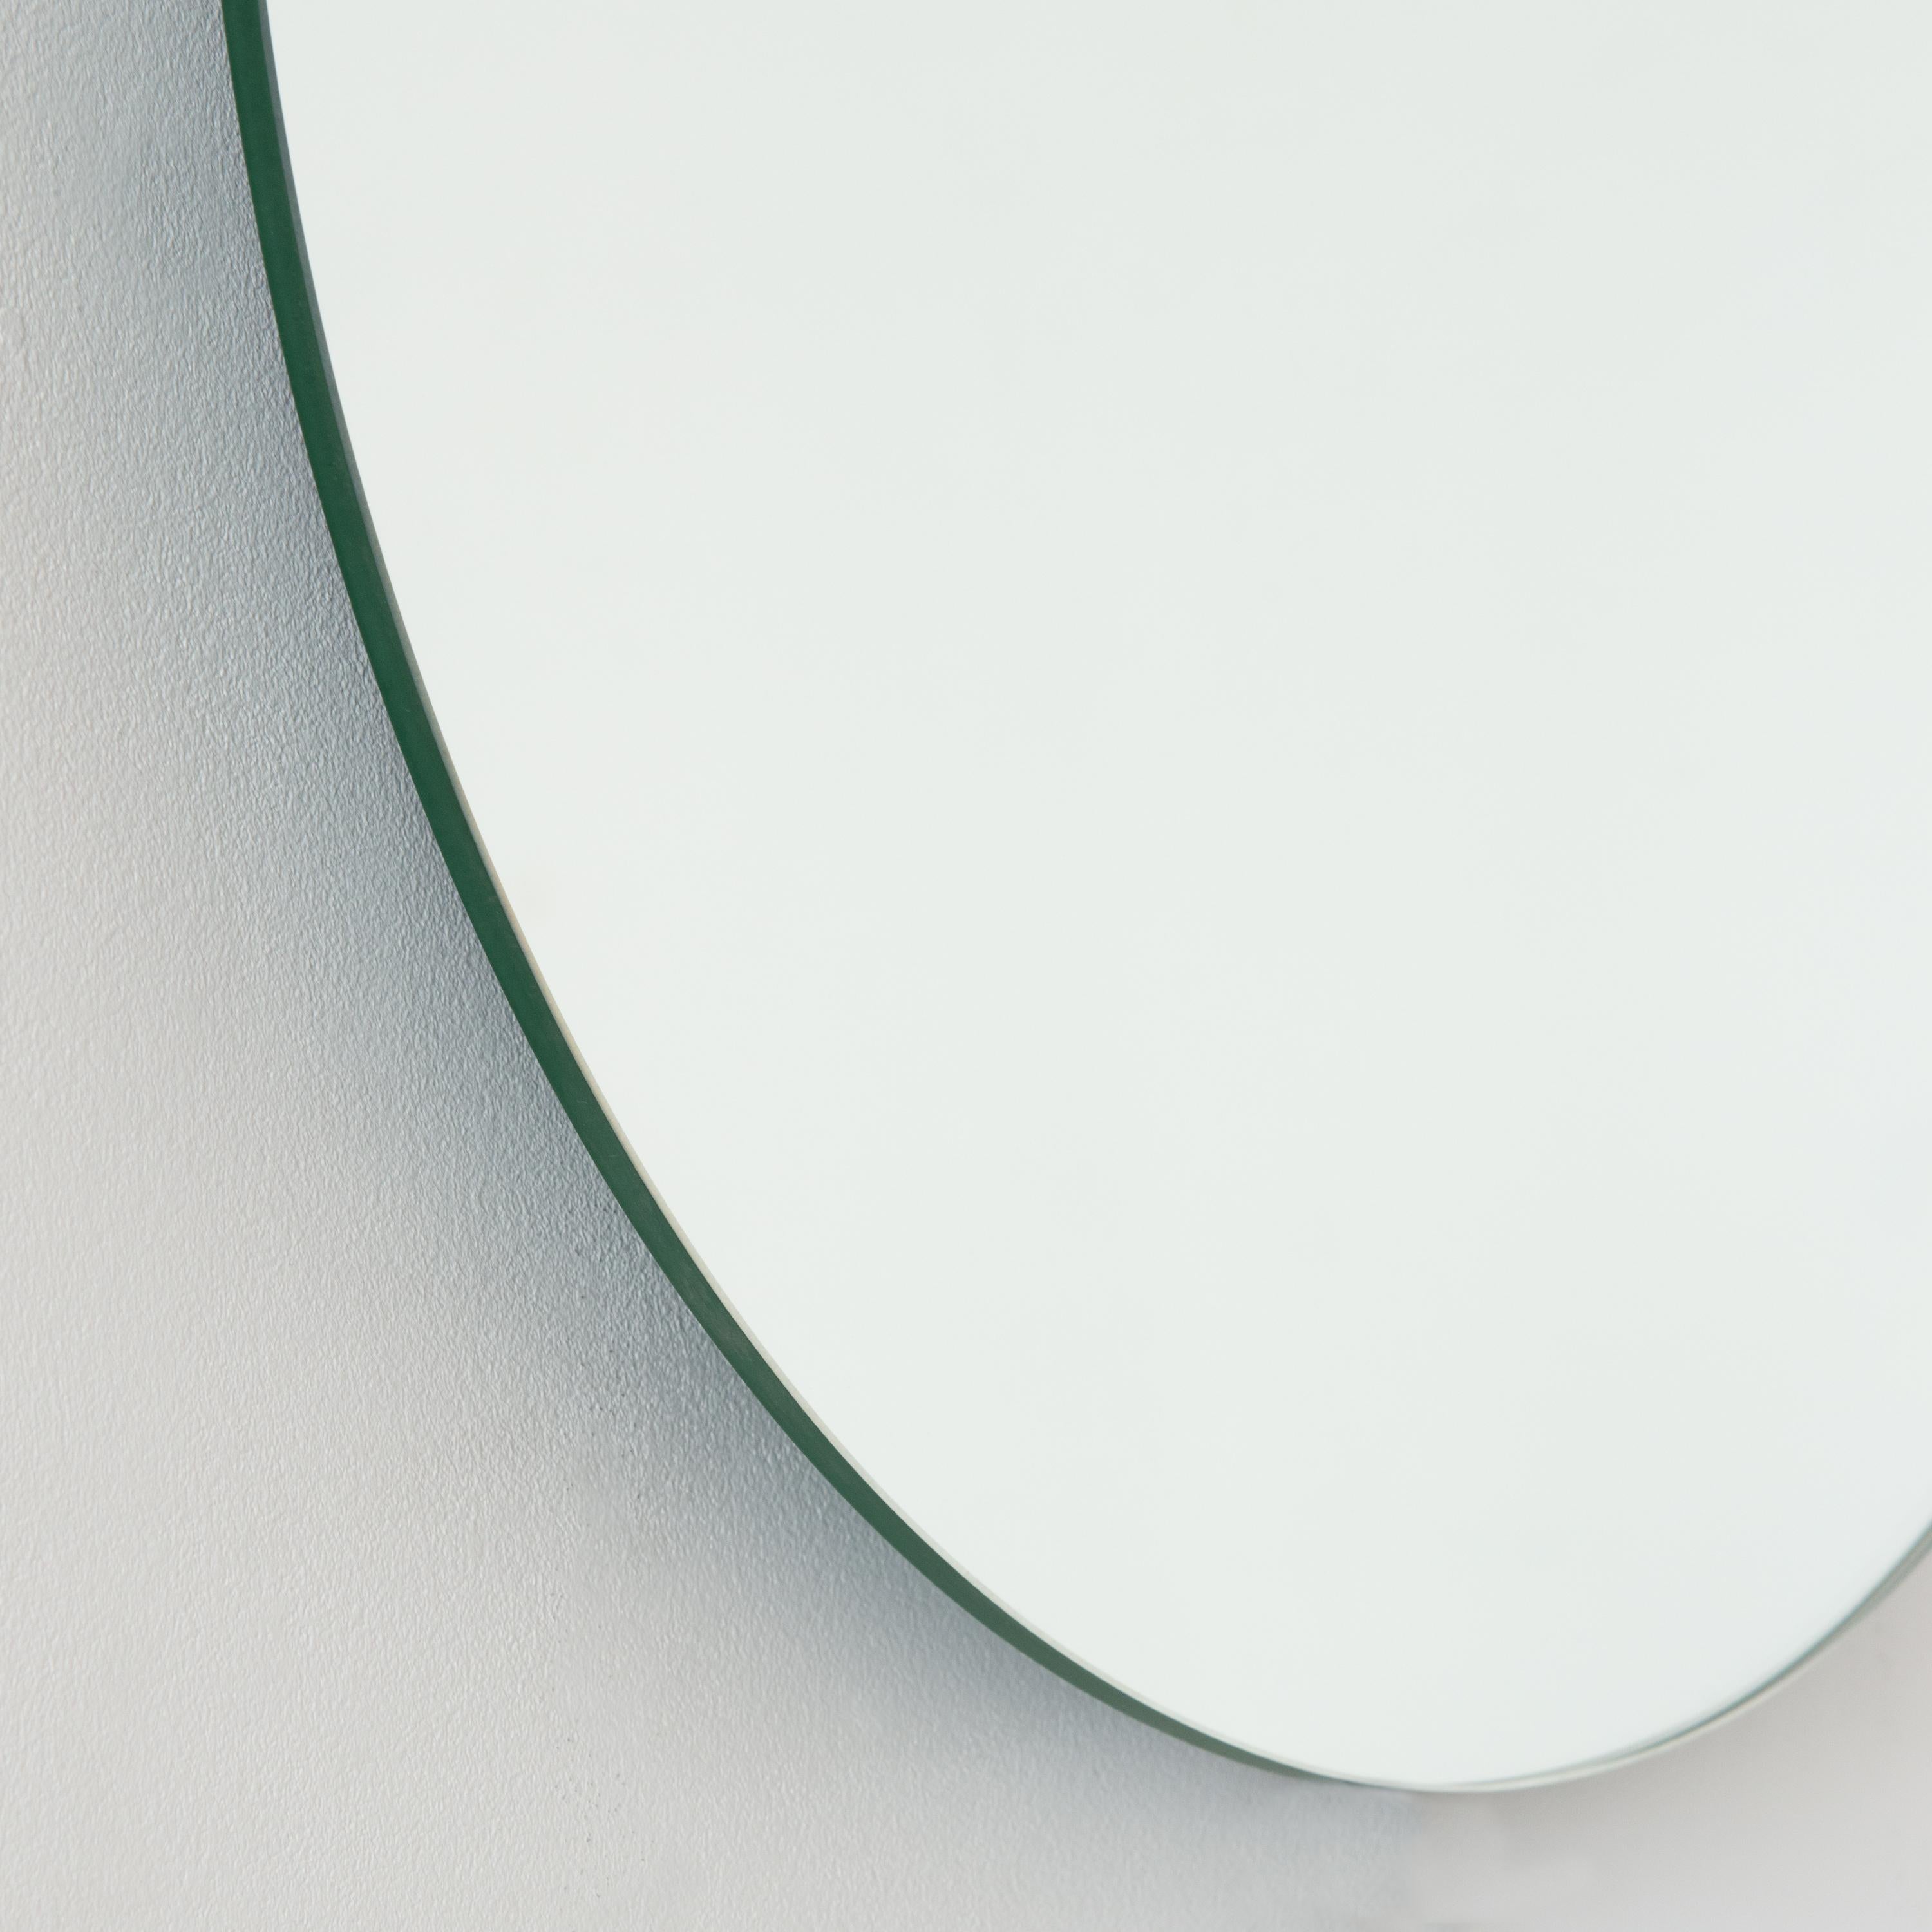 Orbis Blue Tinted Round Contemporary Frameless Mirror, Medium For Sale 5